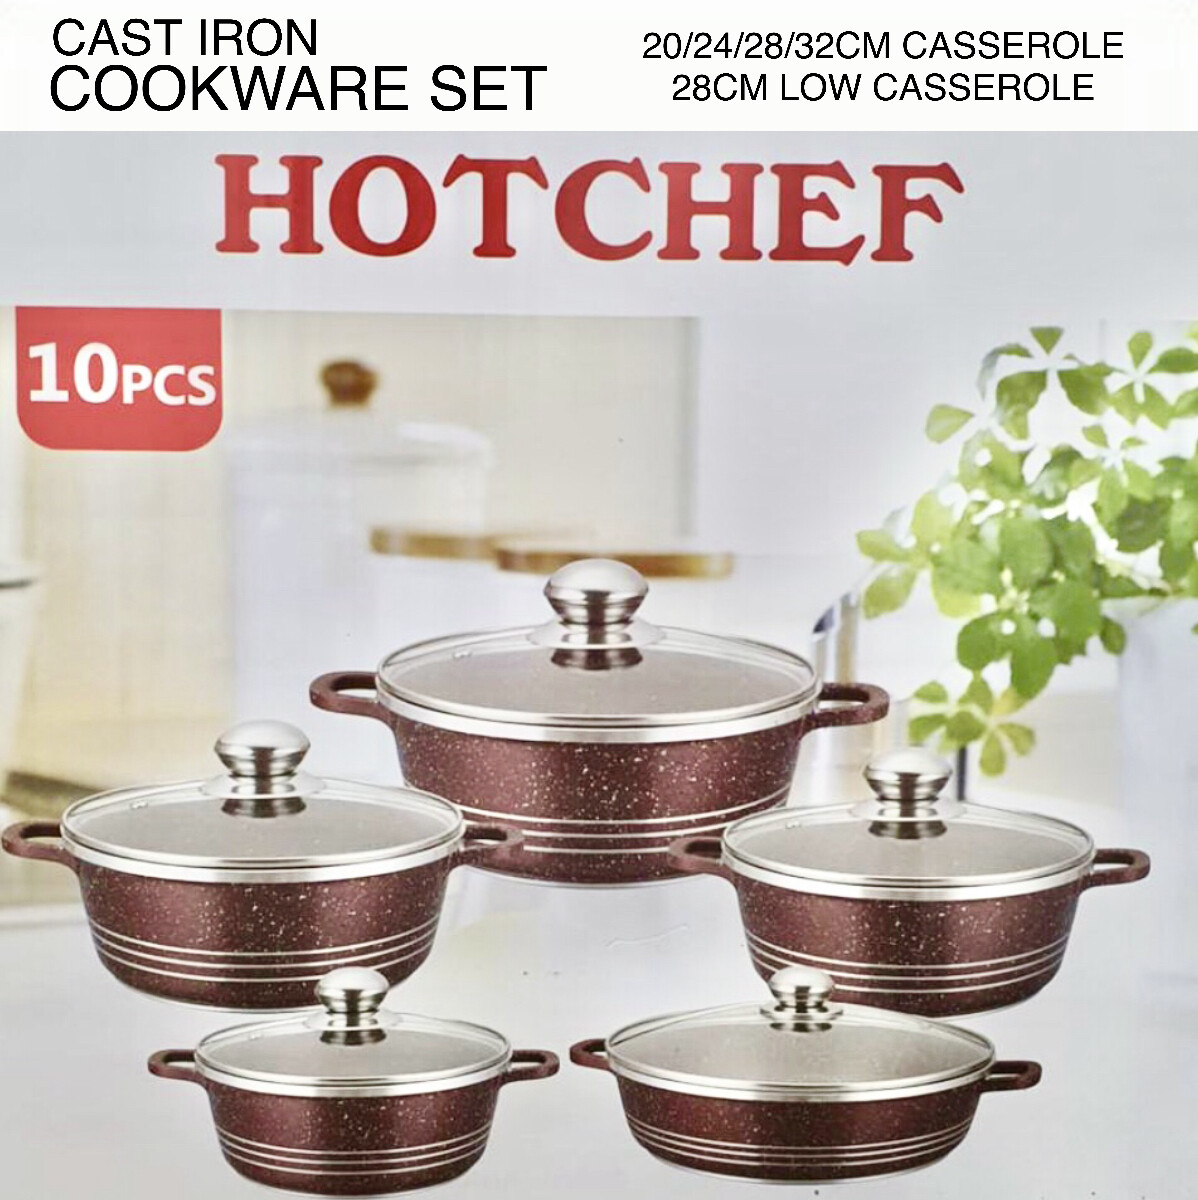 HOT CHEF Cookware Set